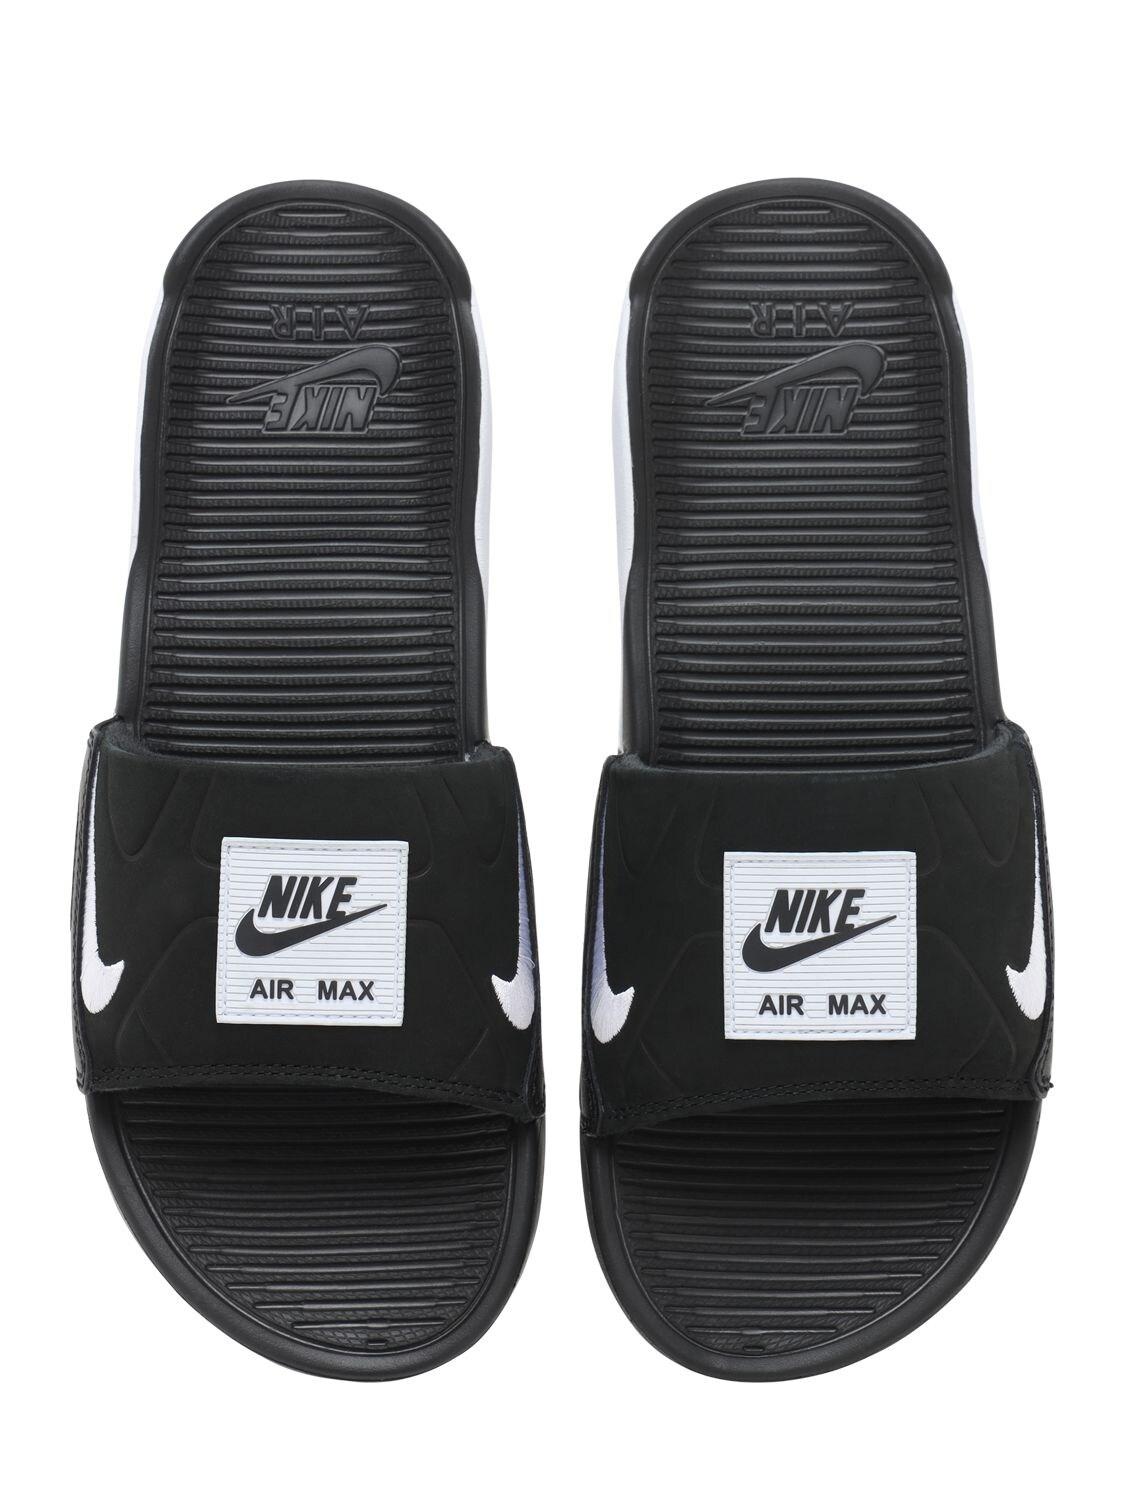 Nike Air Max 90 Slide in Black | White (Black) for Men - Save 52 ...